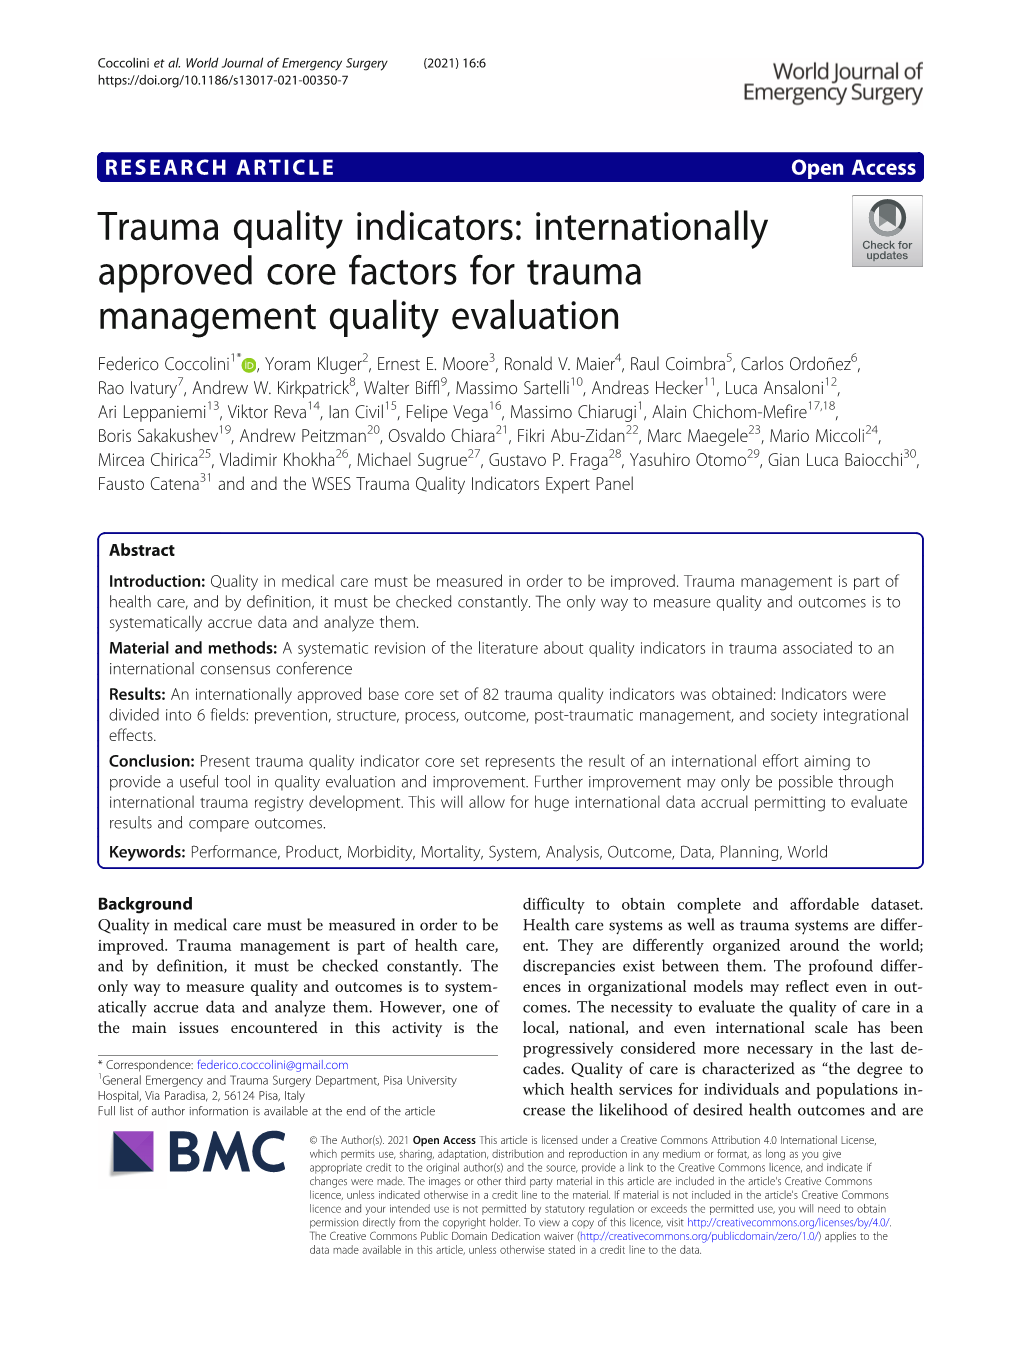 Trauma Quality Indicators: Internationally Approved Core Factors for Trauma Management Quality Evaluation Federico Coccolini1* , Yoram Kluger2, Ernest E